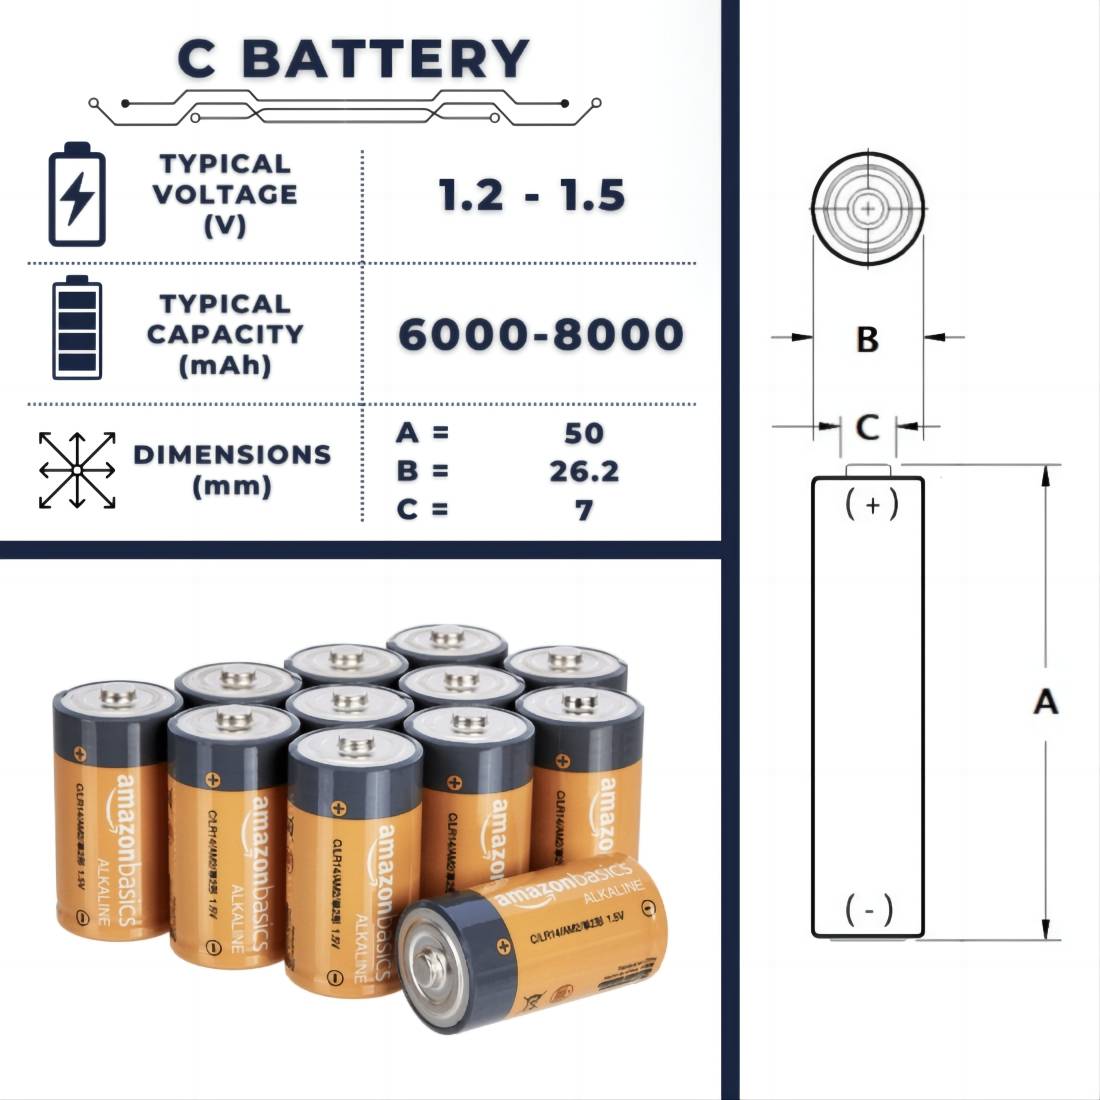 C-battery-characteristics